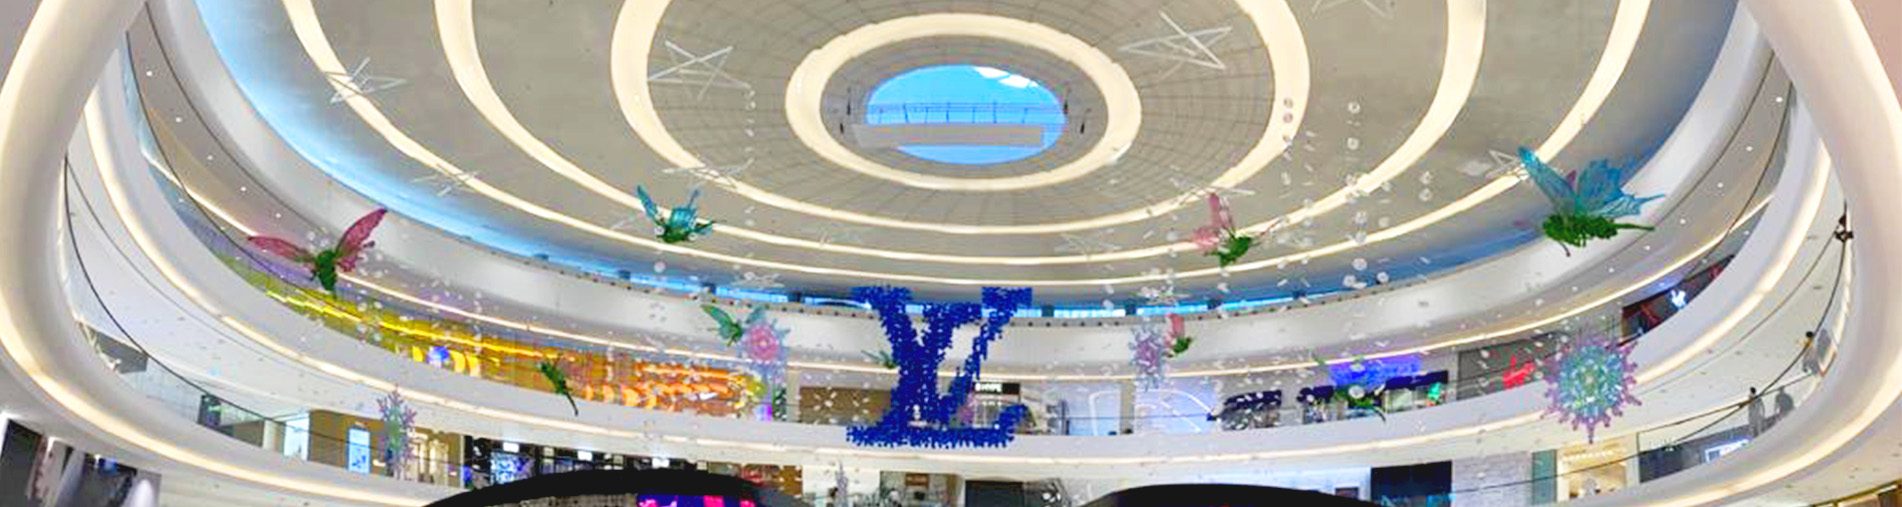 Festive Decorations at Dubai Mall